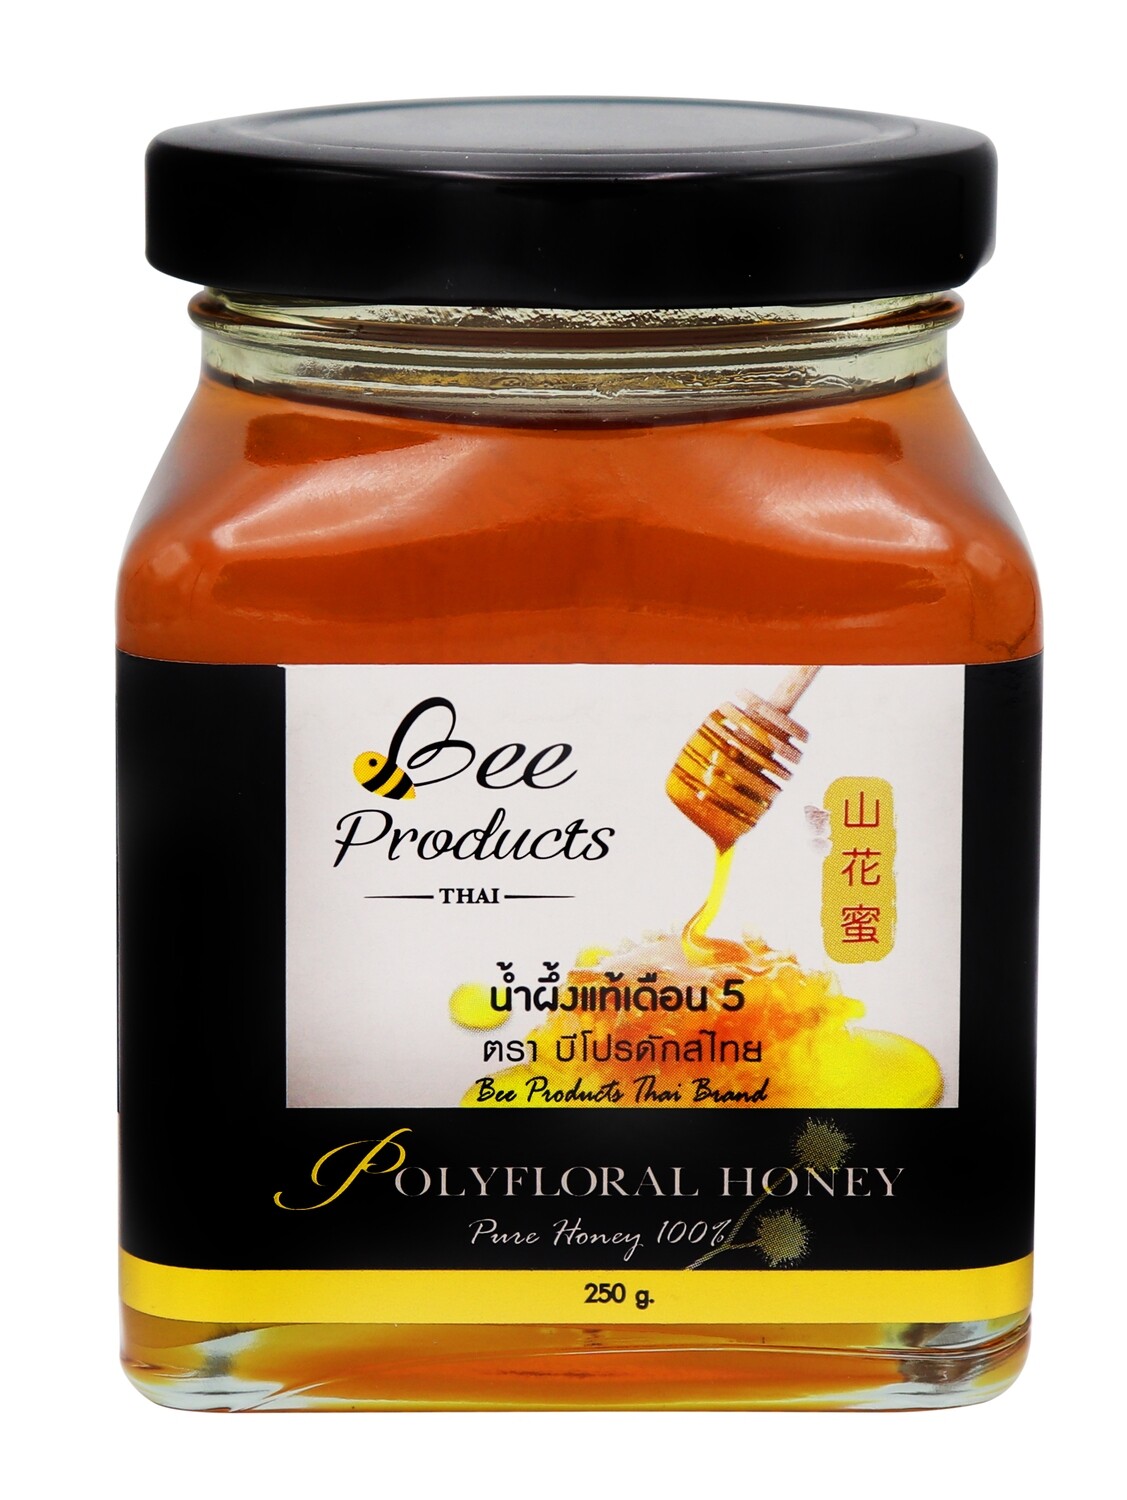 Polyforal Honey (Glass)